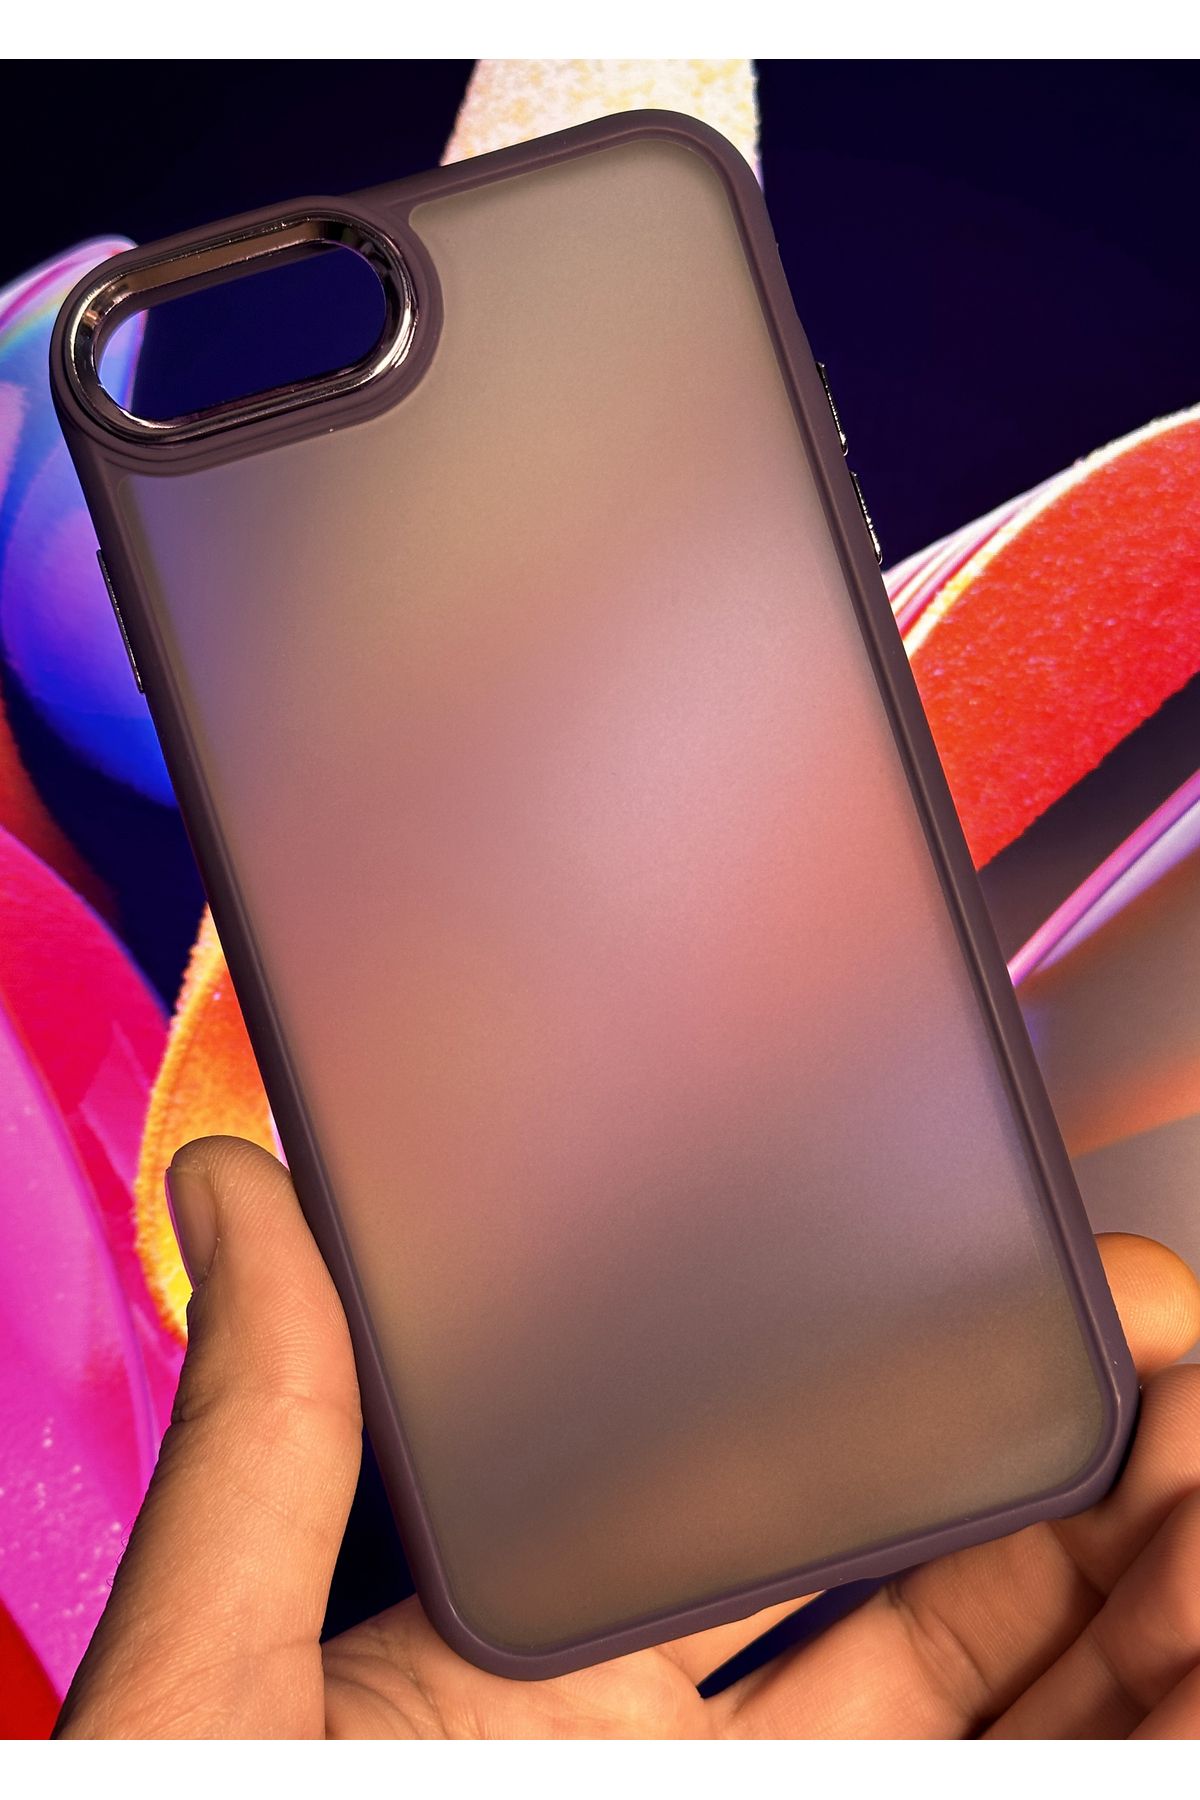 Fibaks Apple iPhone 7 Plus&8 Plus Kılıf Metal Çerçeve Hassas Butonlu Renkli Buzlu Şeffaf Transparan Kapak